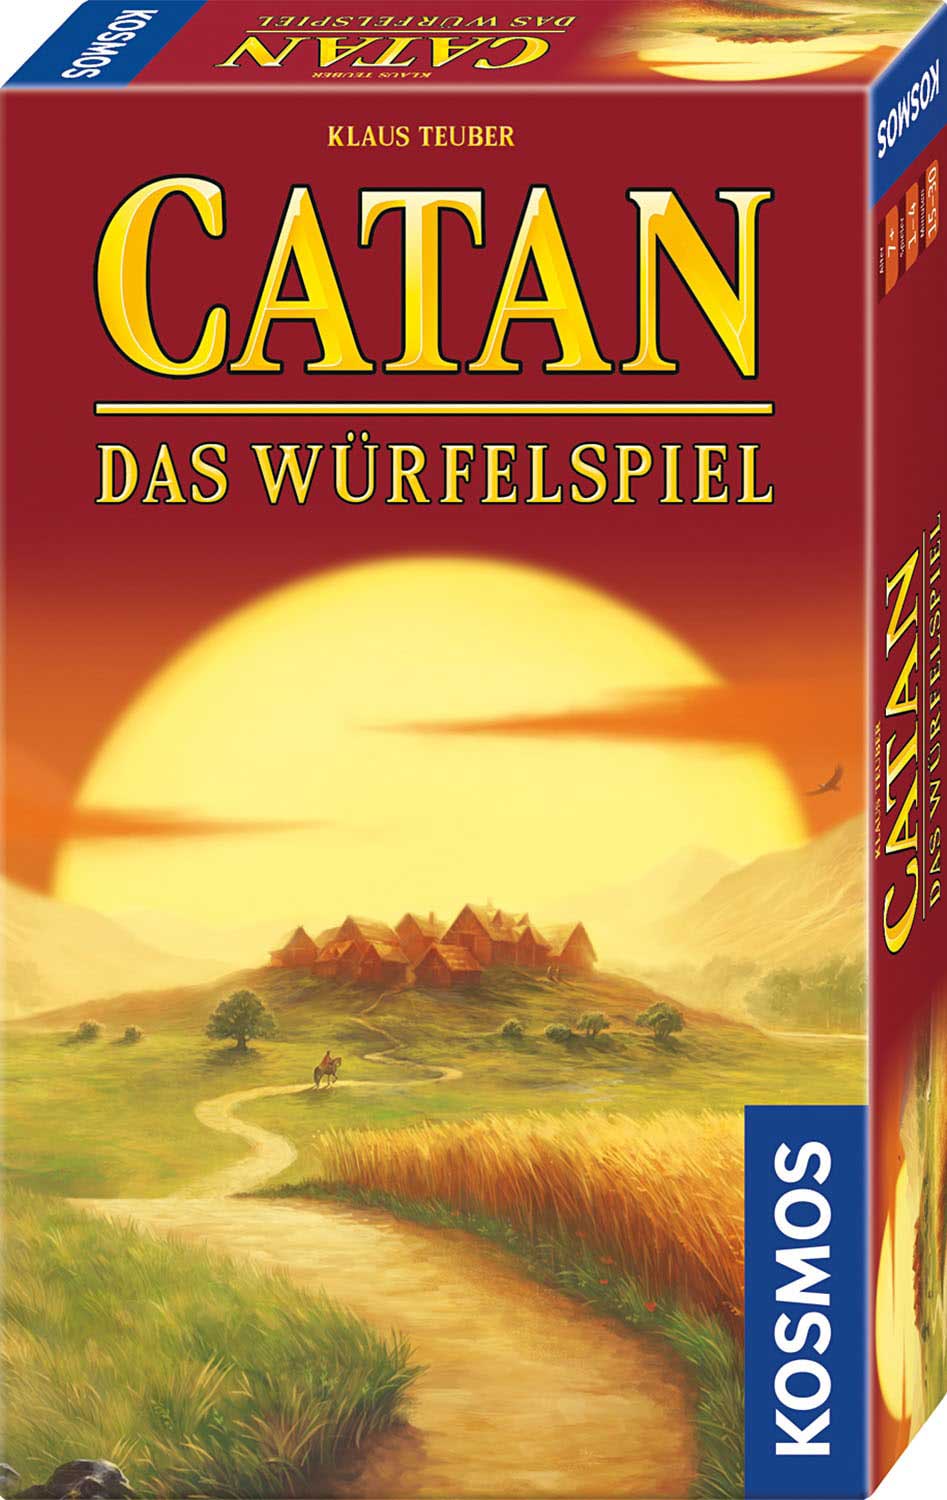 Catan - Das Würfelspiel